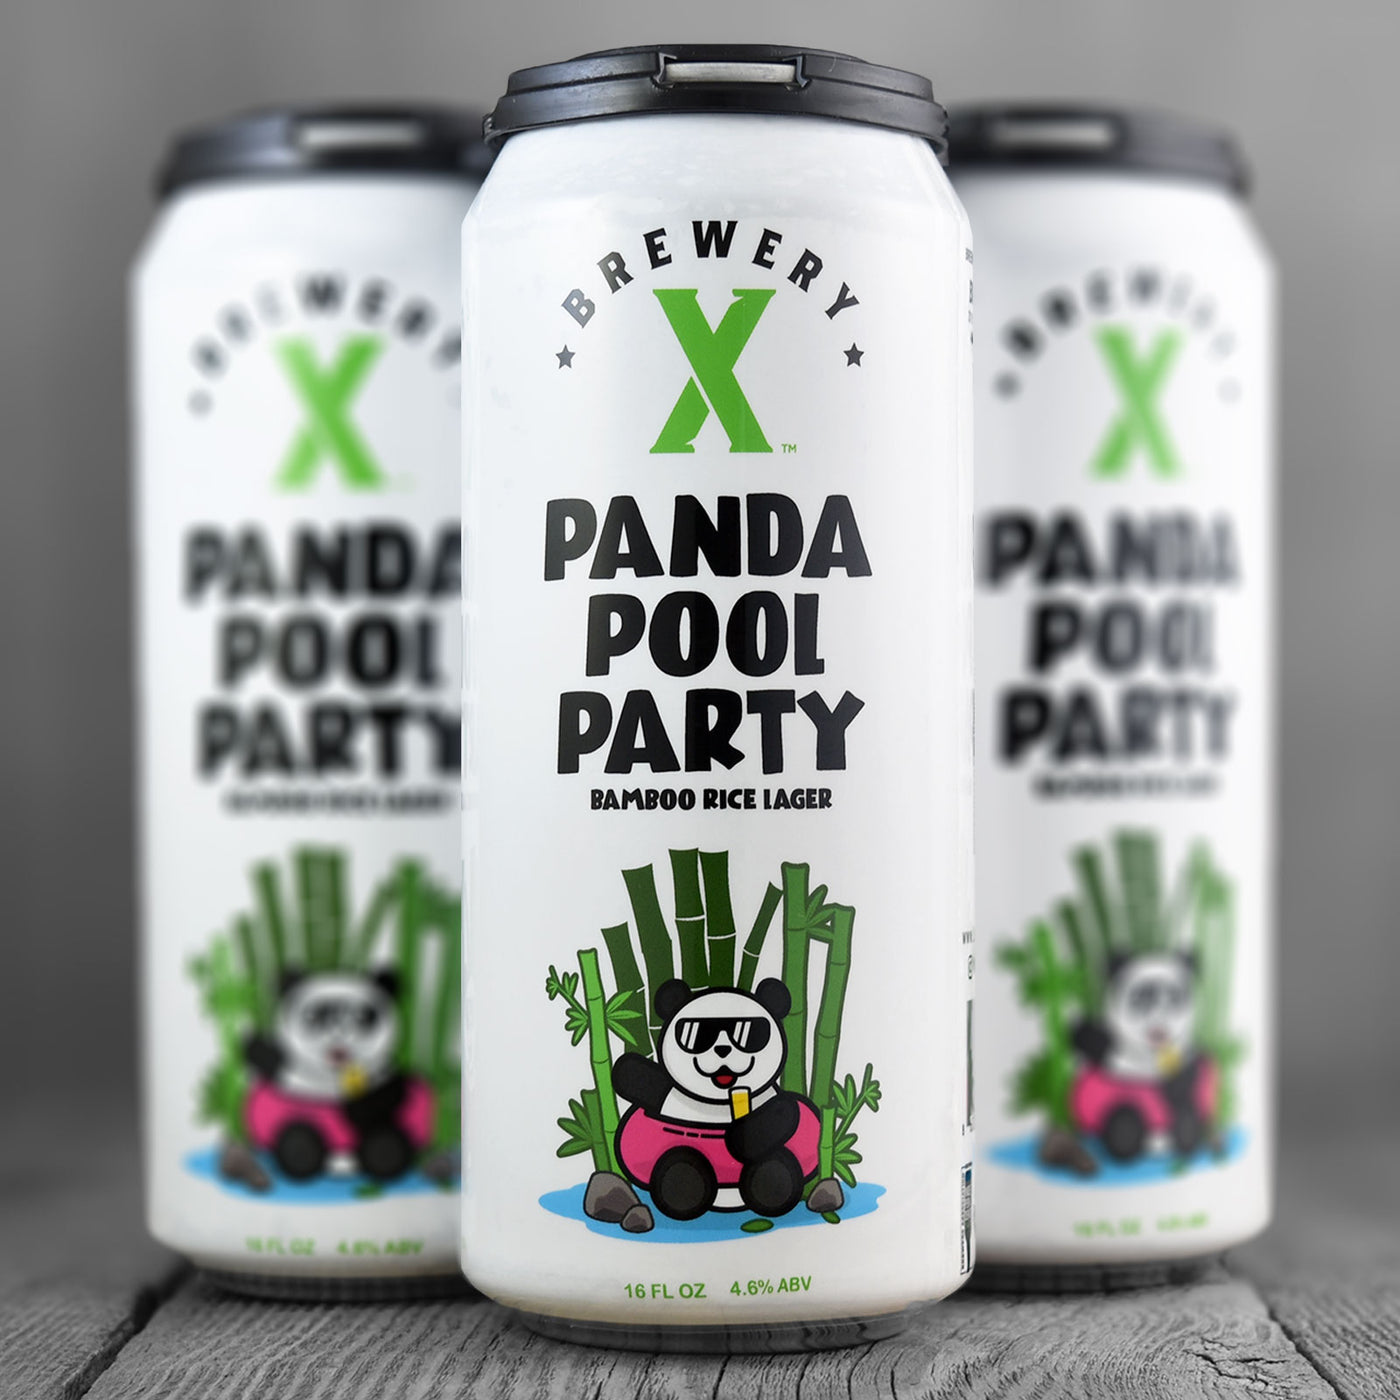 Brewery X Panda Pool Party